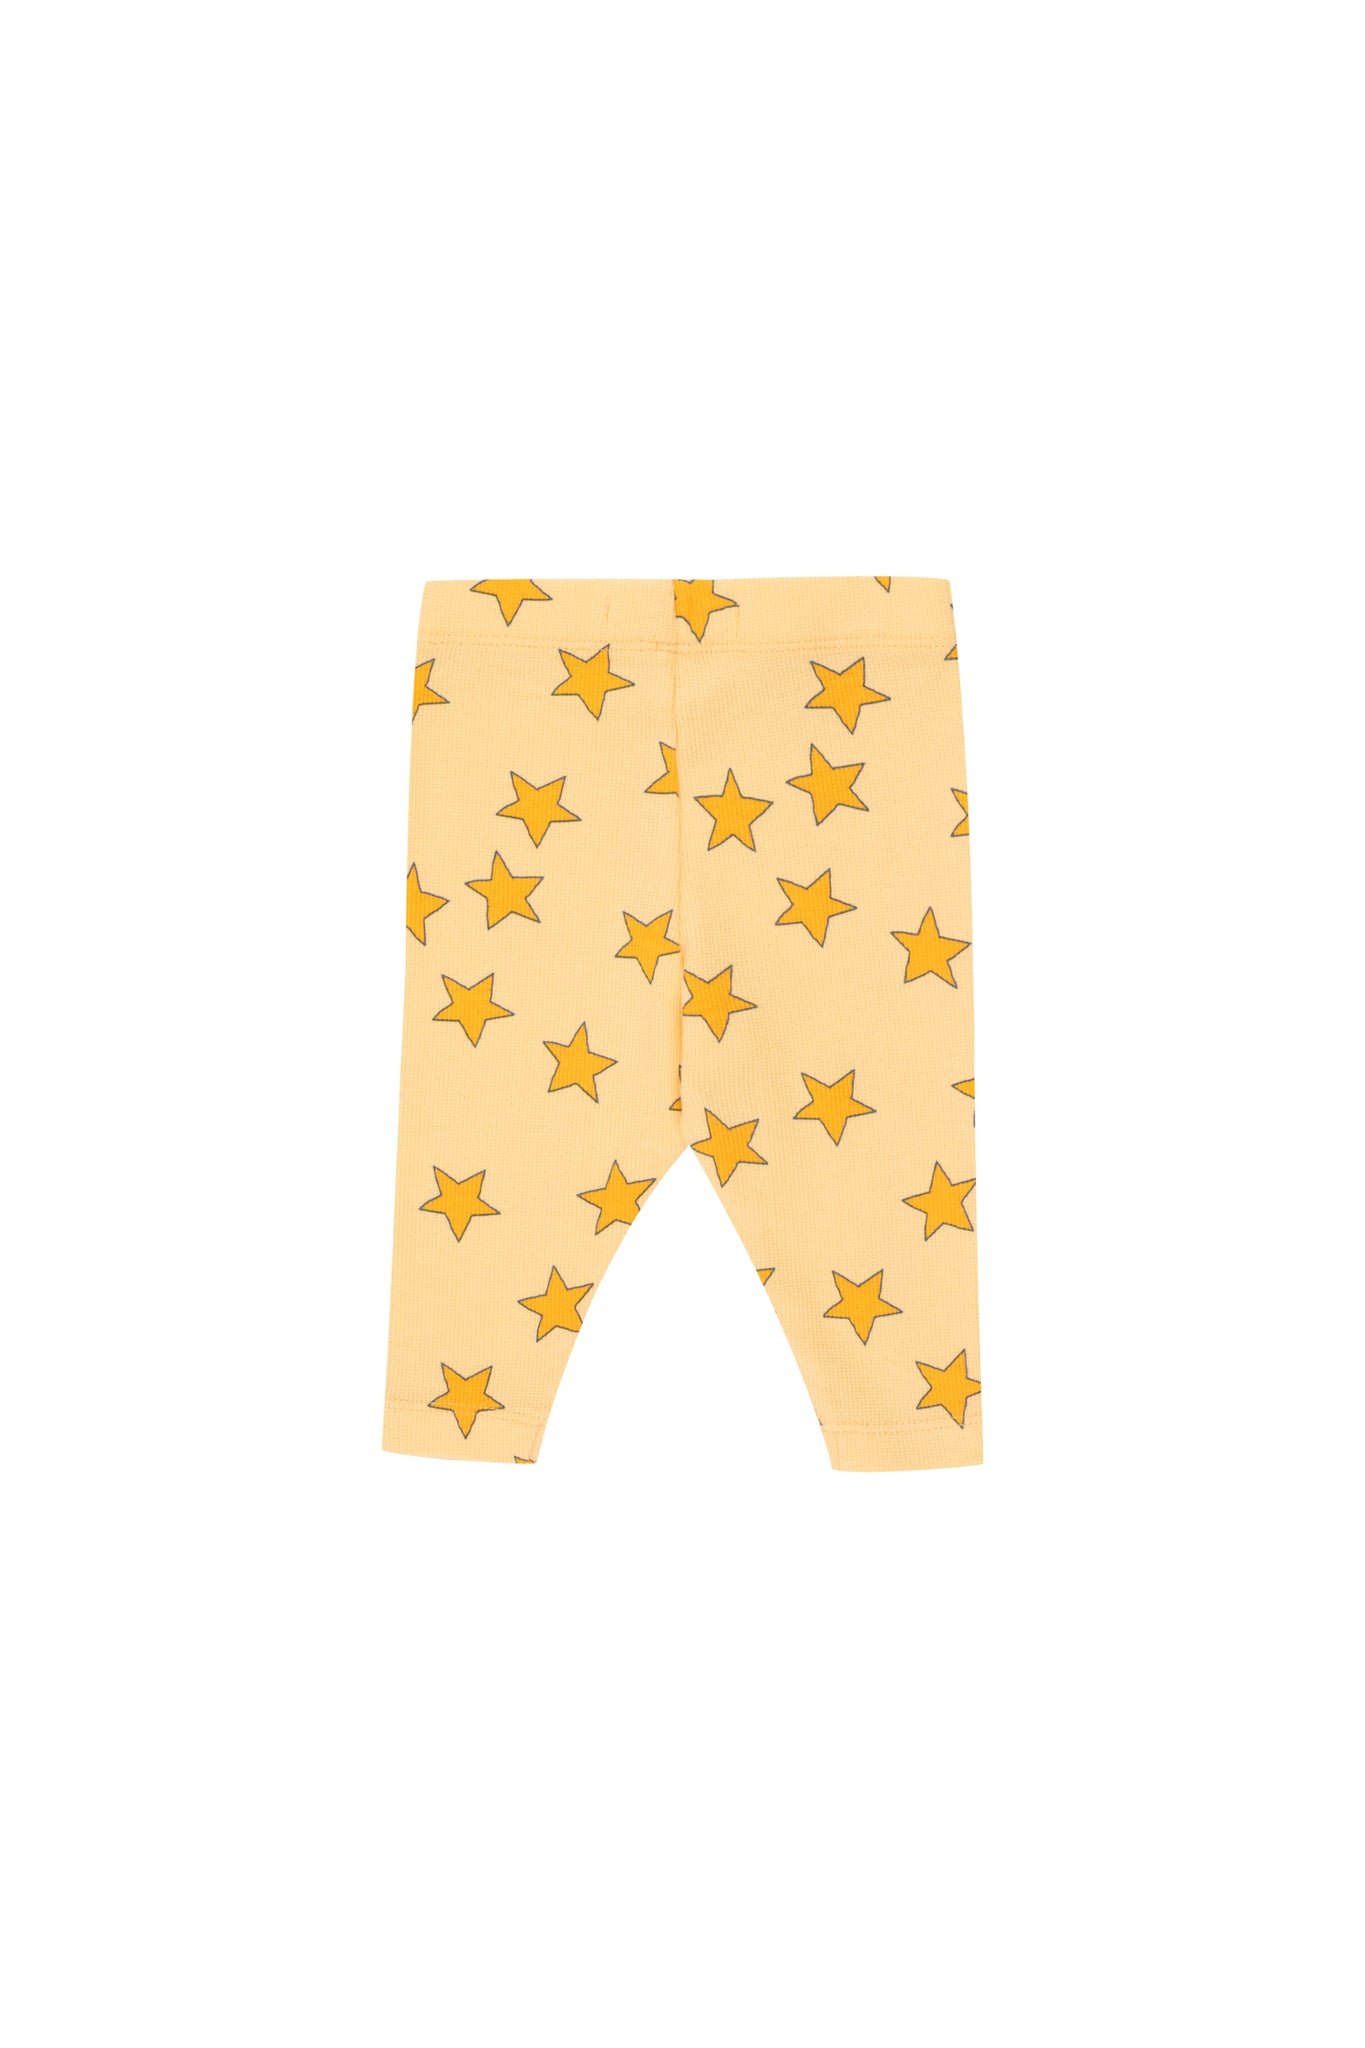 STARS BABY PANT mellow yellow